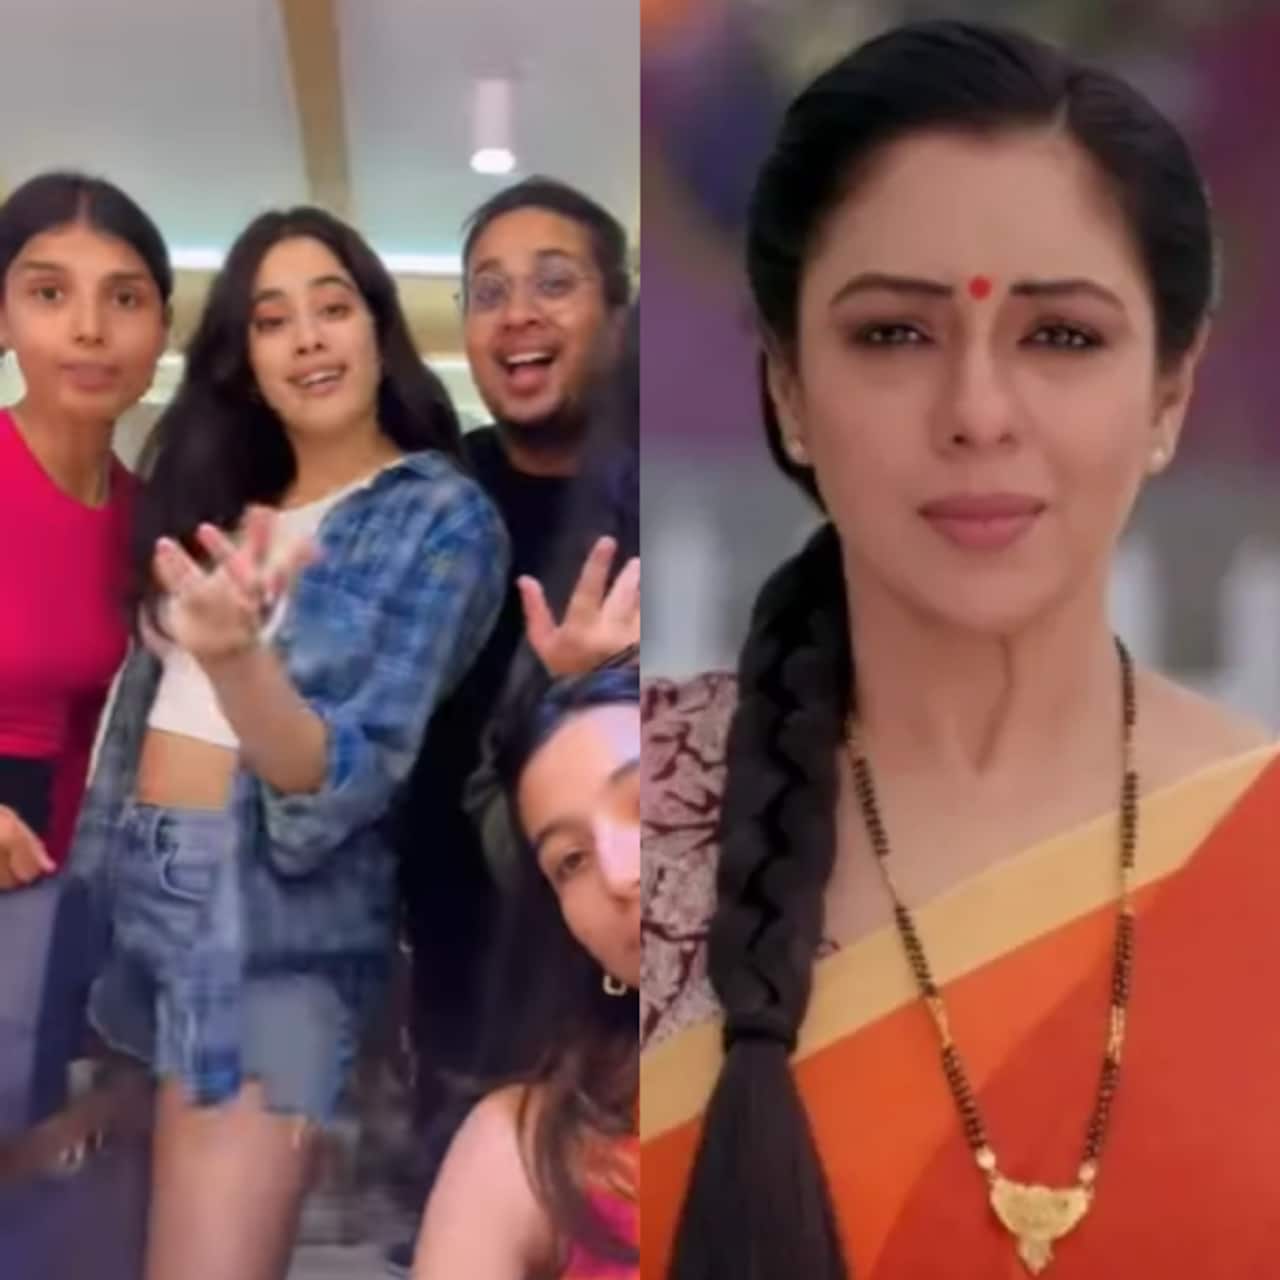 Anupamaa: After Naagin 6, Janhvi Kapoor mimics Rupali Ganguly's famous 'Aapko kya' dialogue in the latest reel [WATCH]